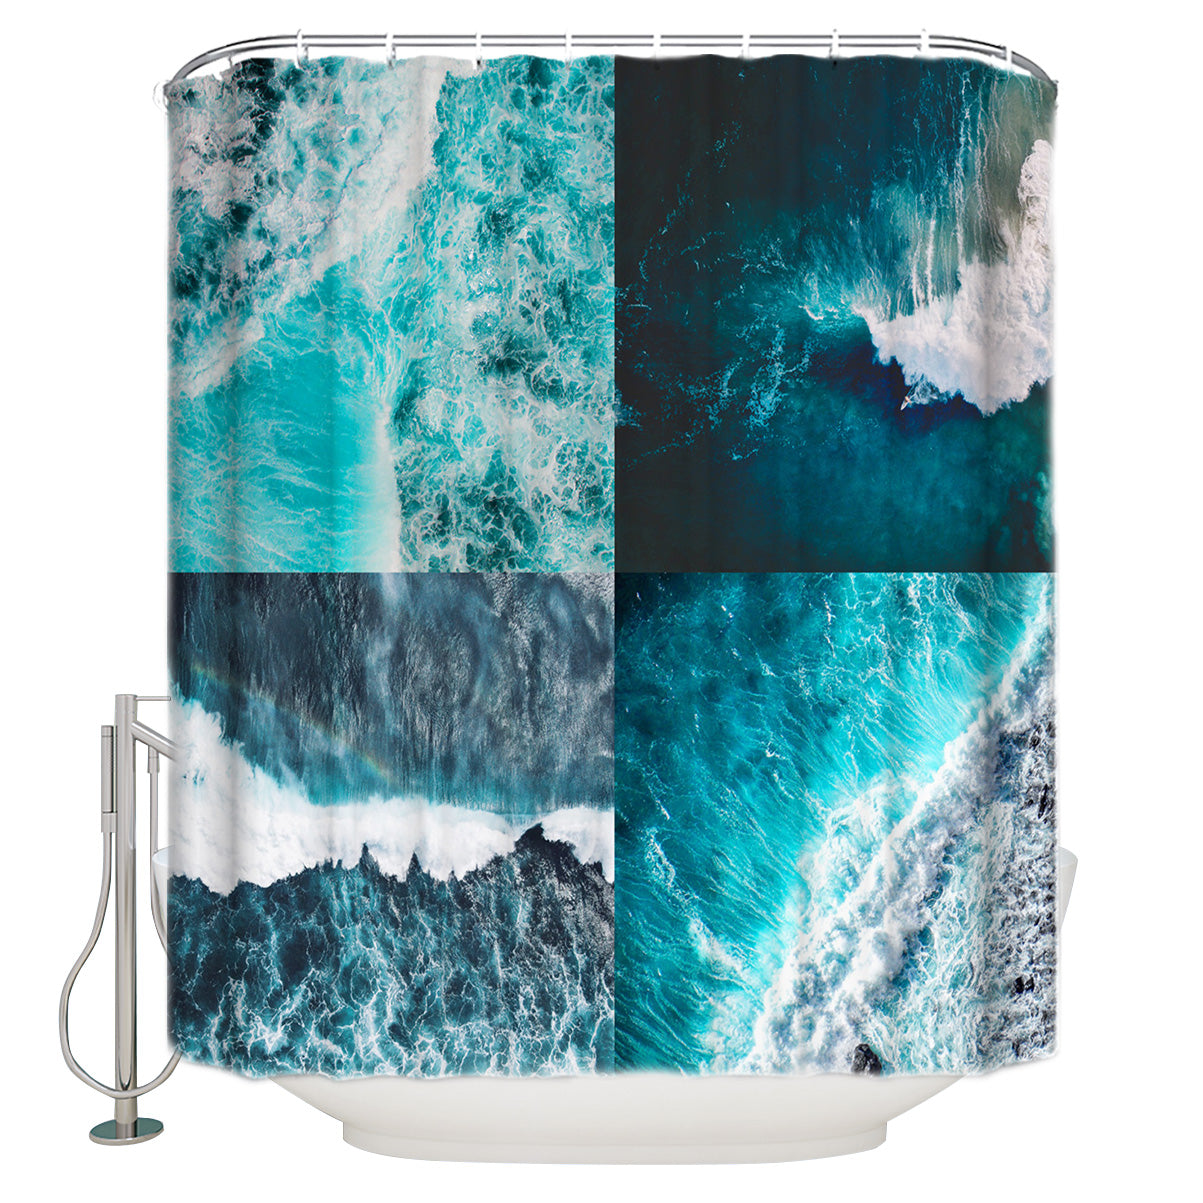 Four-frame Blue Ocean Waves Shower Curtain | Blue Waves Bathroom Curtain